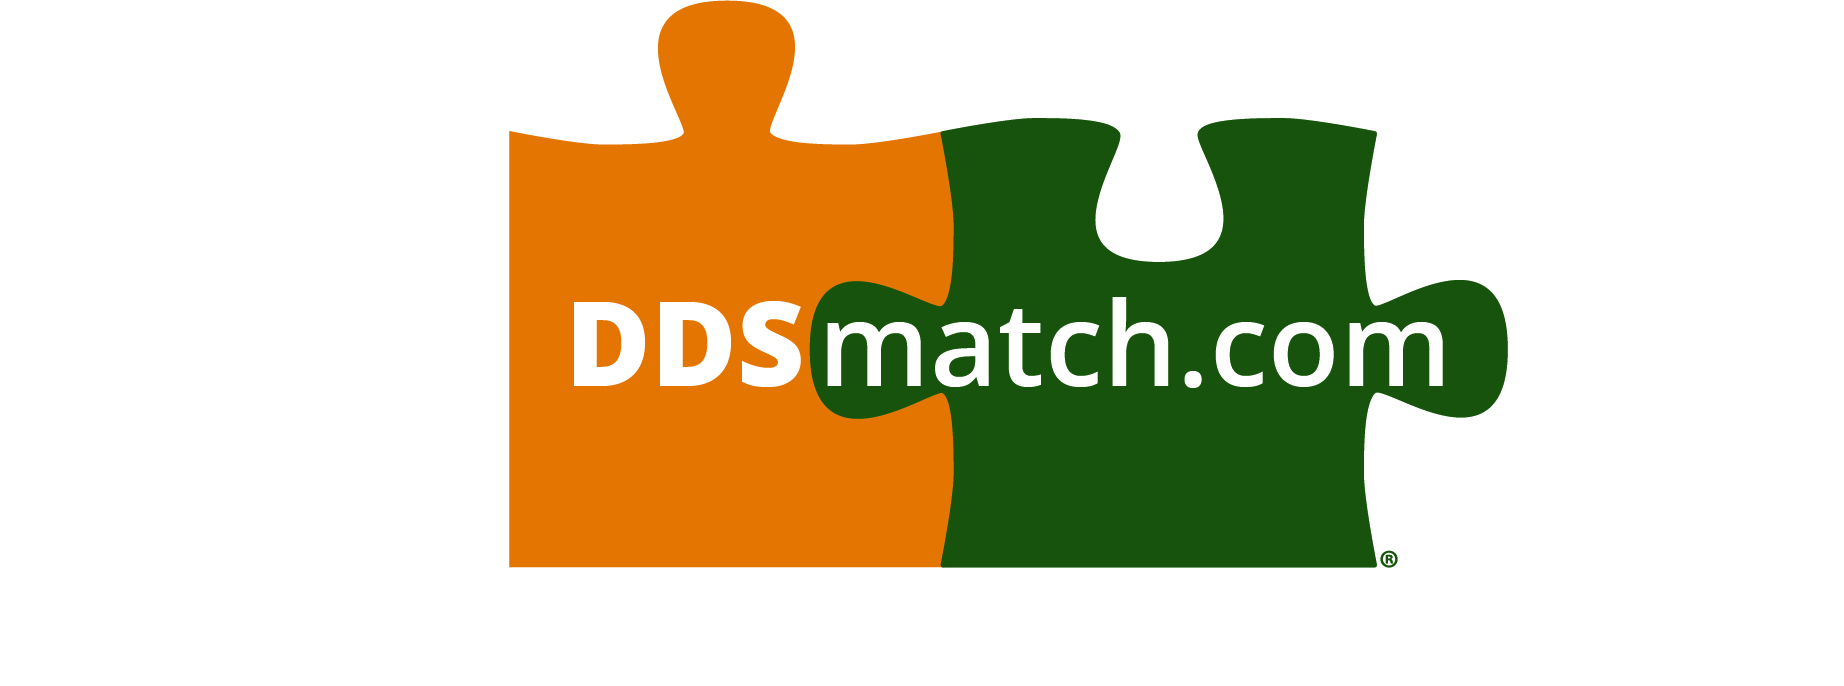 ddsmatch.com - John Waco Logo